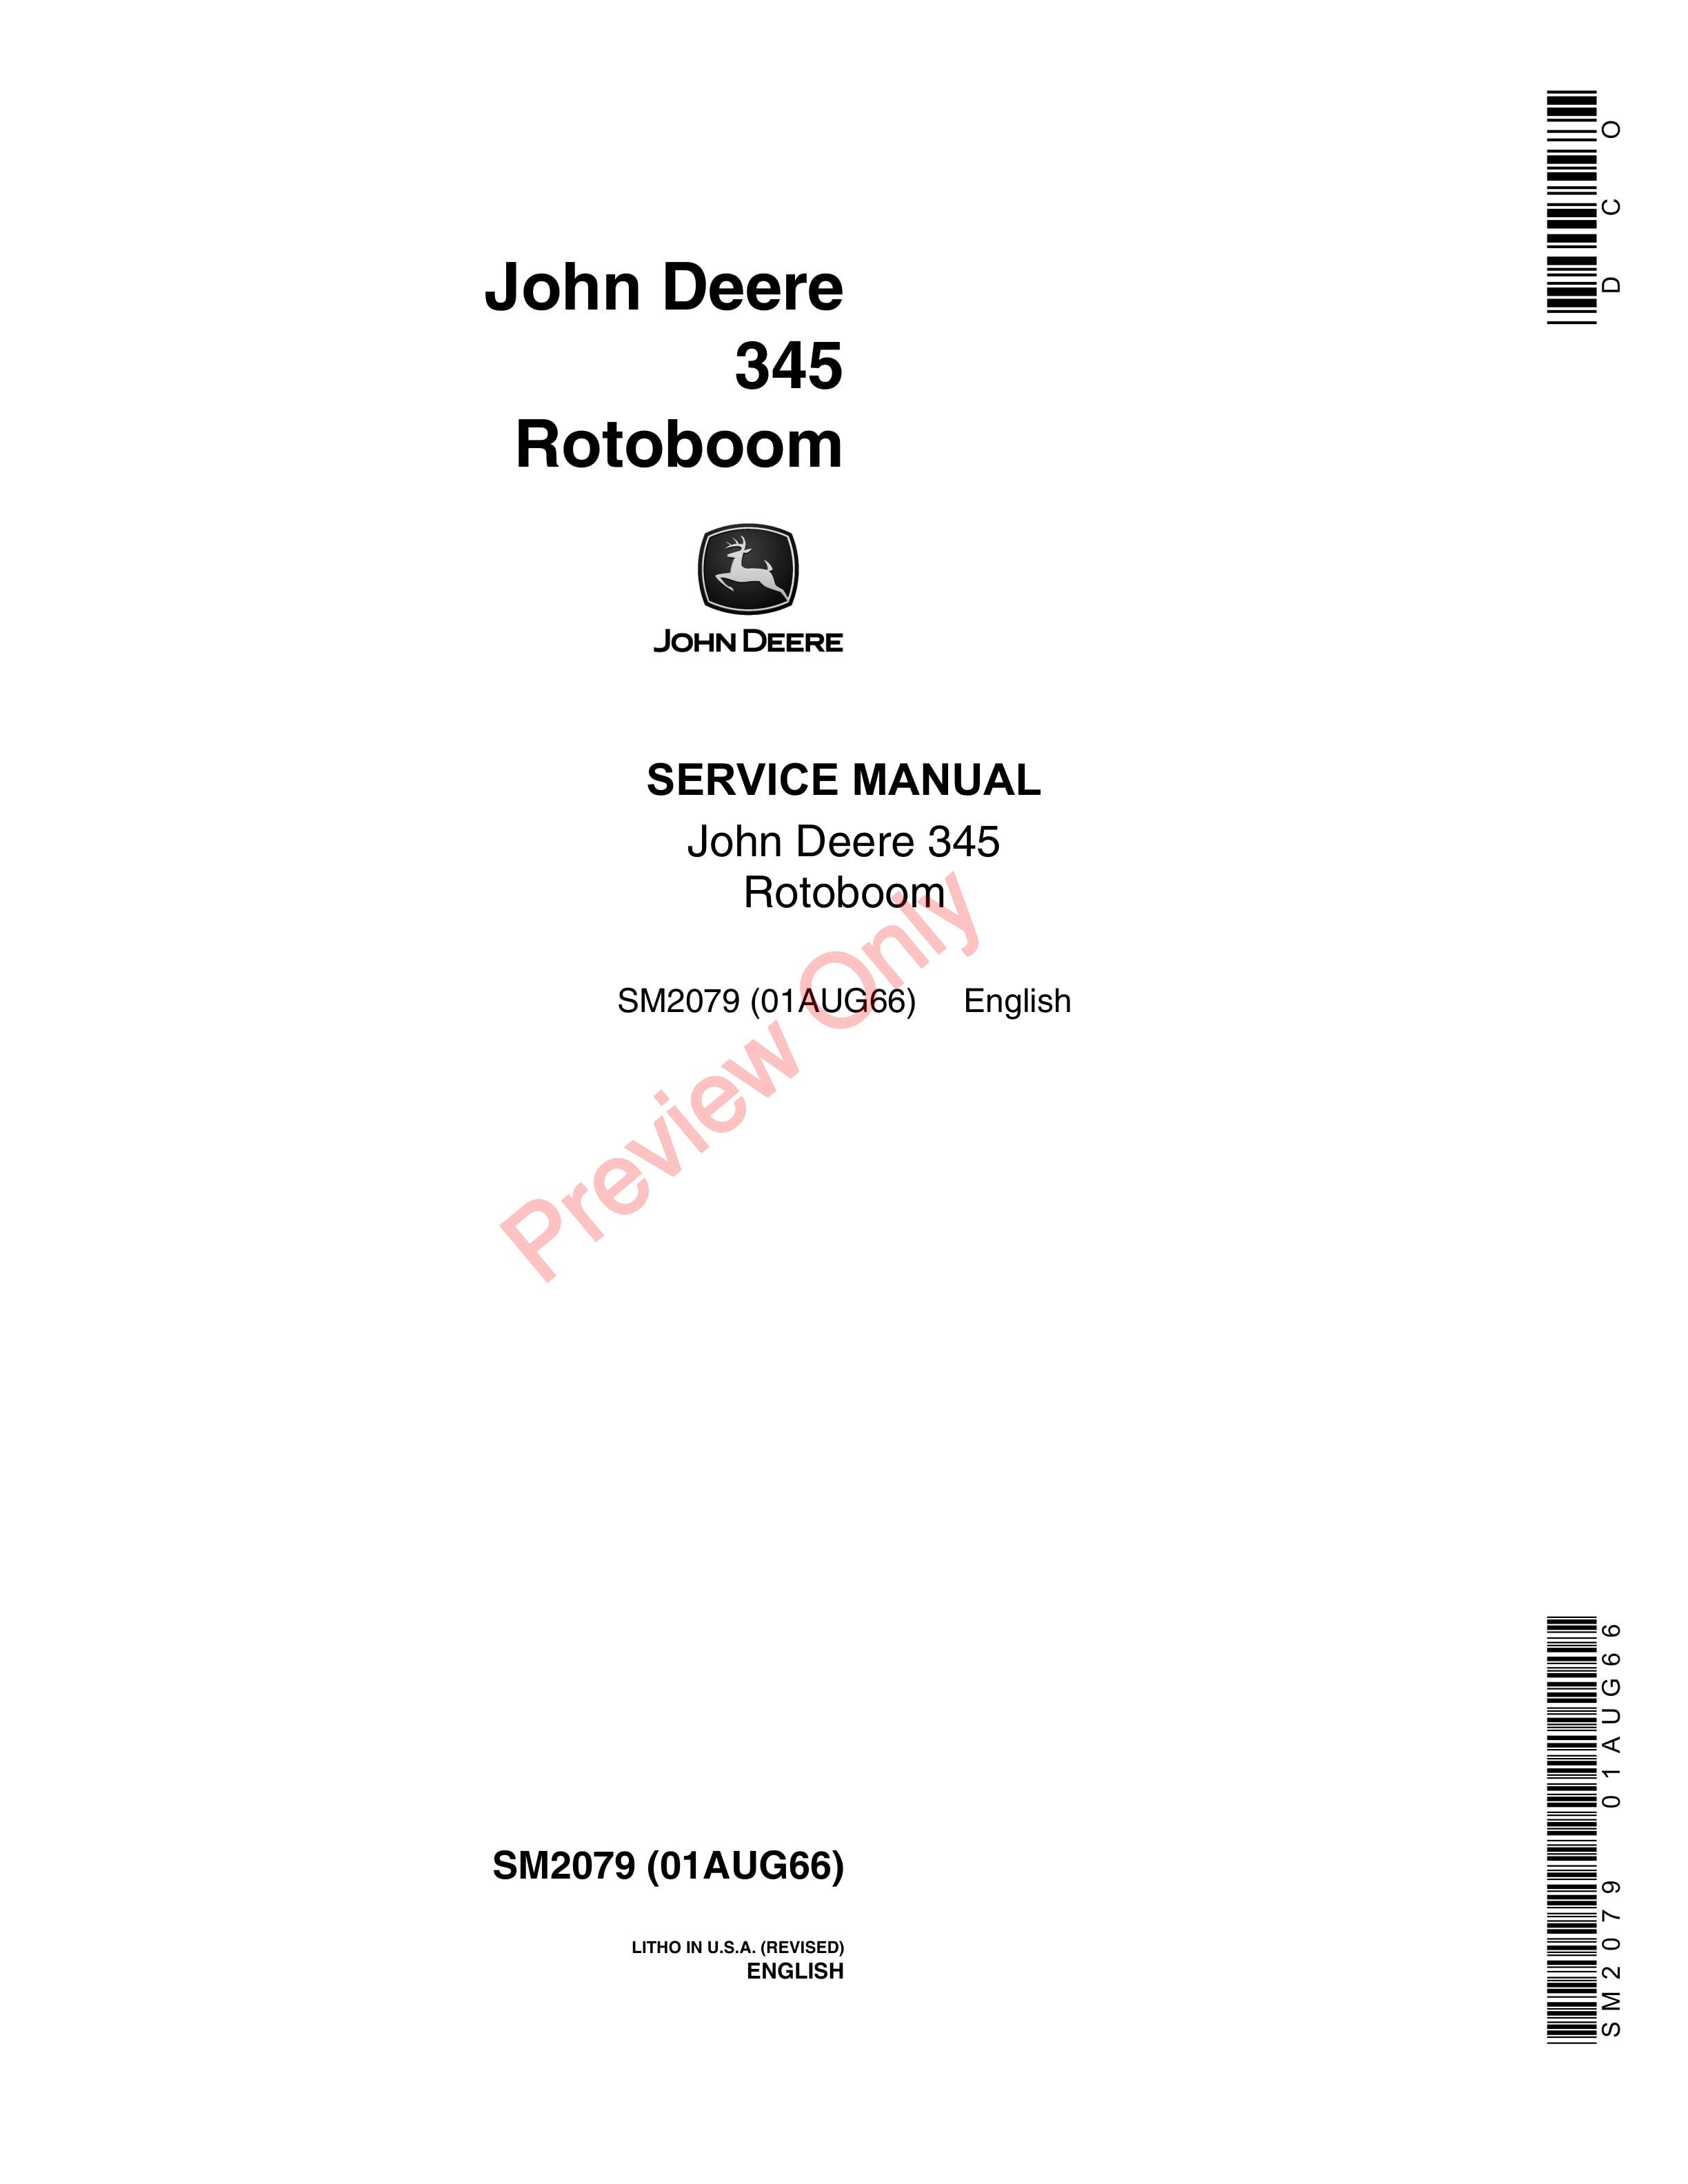 John Deere 345 Rotoboom Service Manual SM2079 01AUG66-1